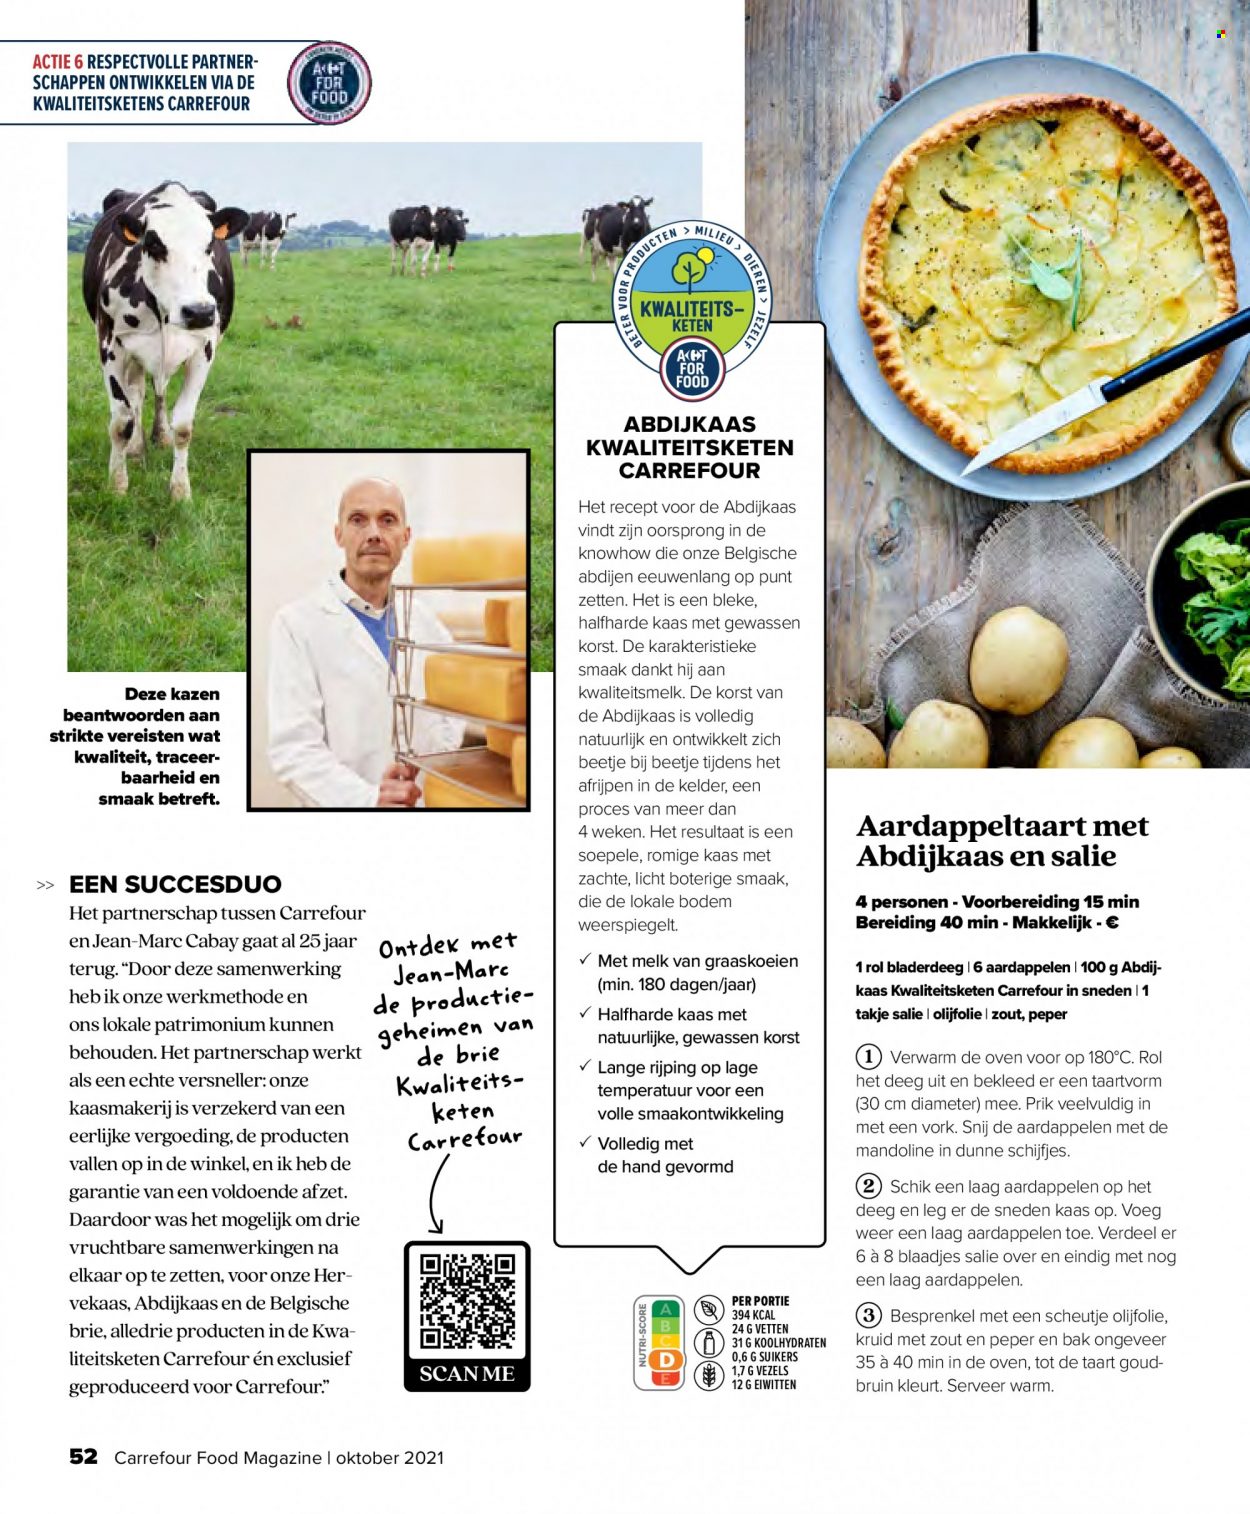 thumbnail - Carrefour-aanbieding - 01/10/2021 - 31/10/2021 -  producten in de aanbieding - aardappelen, kaas, Brie, melk, salie, olijfolie. Pagina 52.